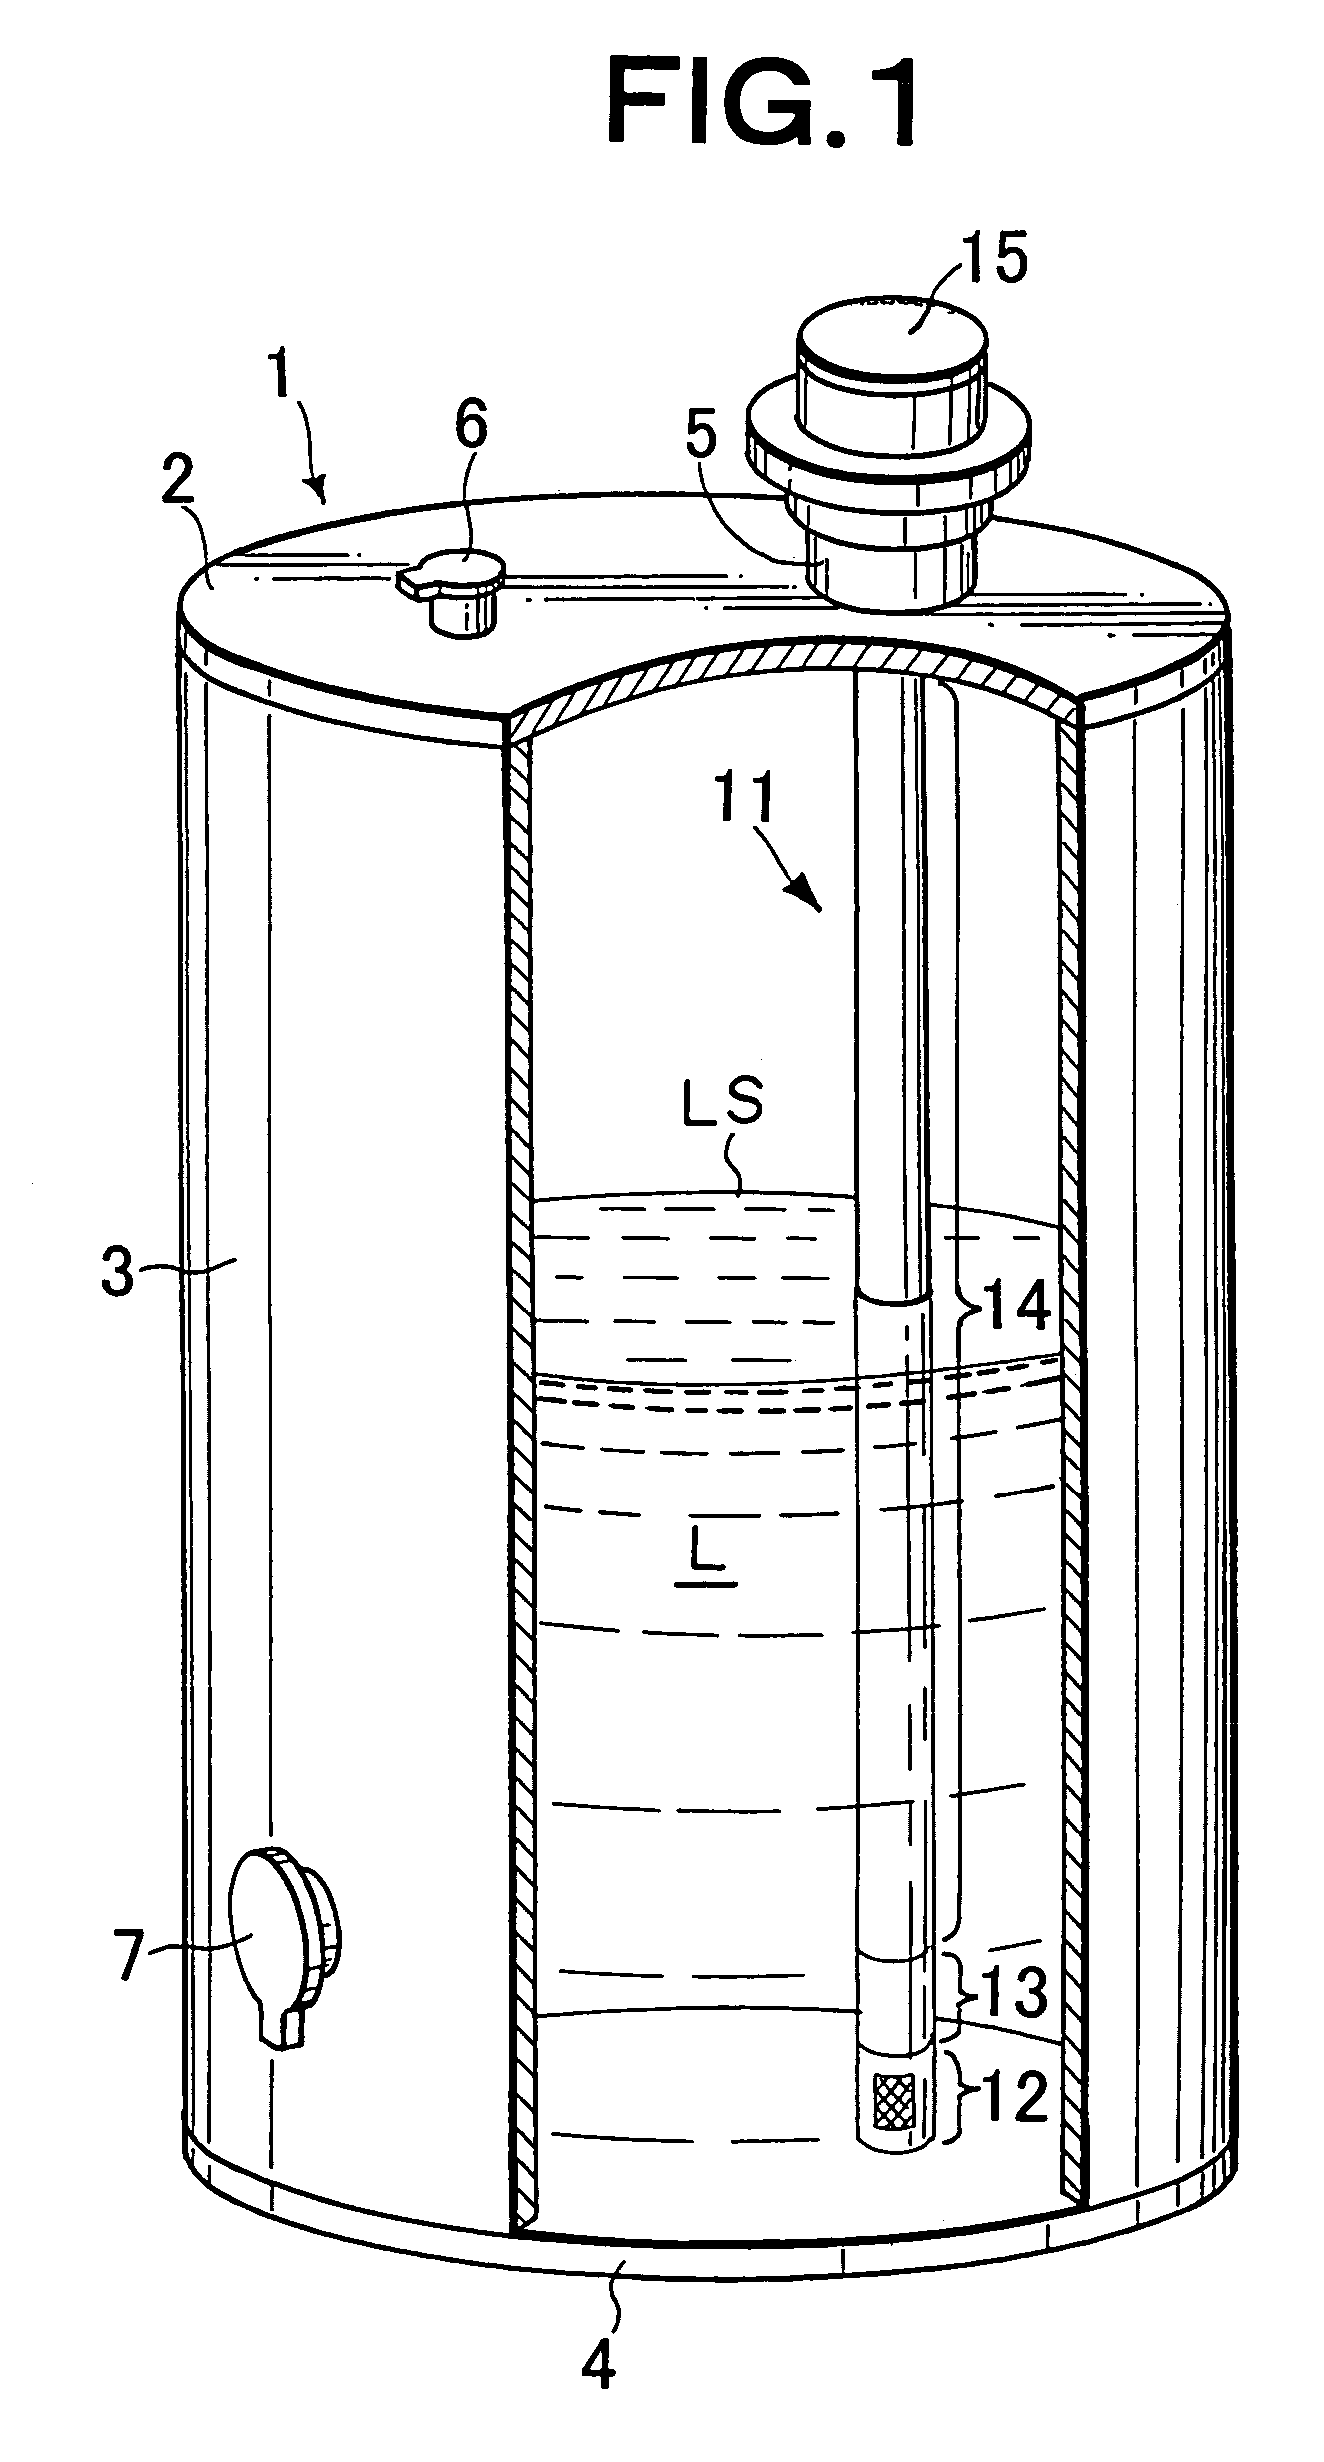 Leak detector of liquid in tank